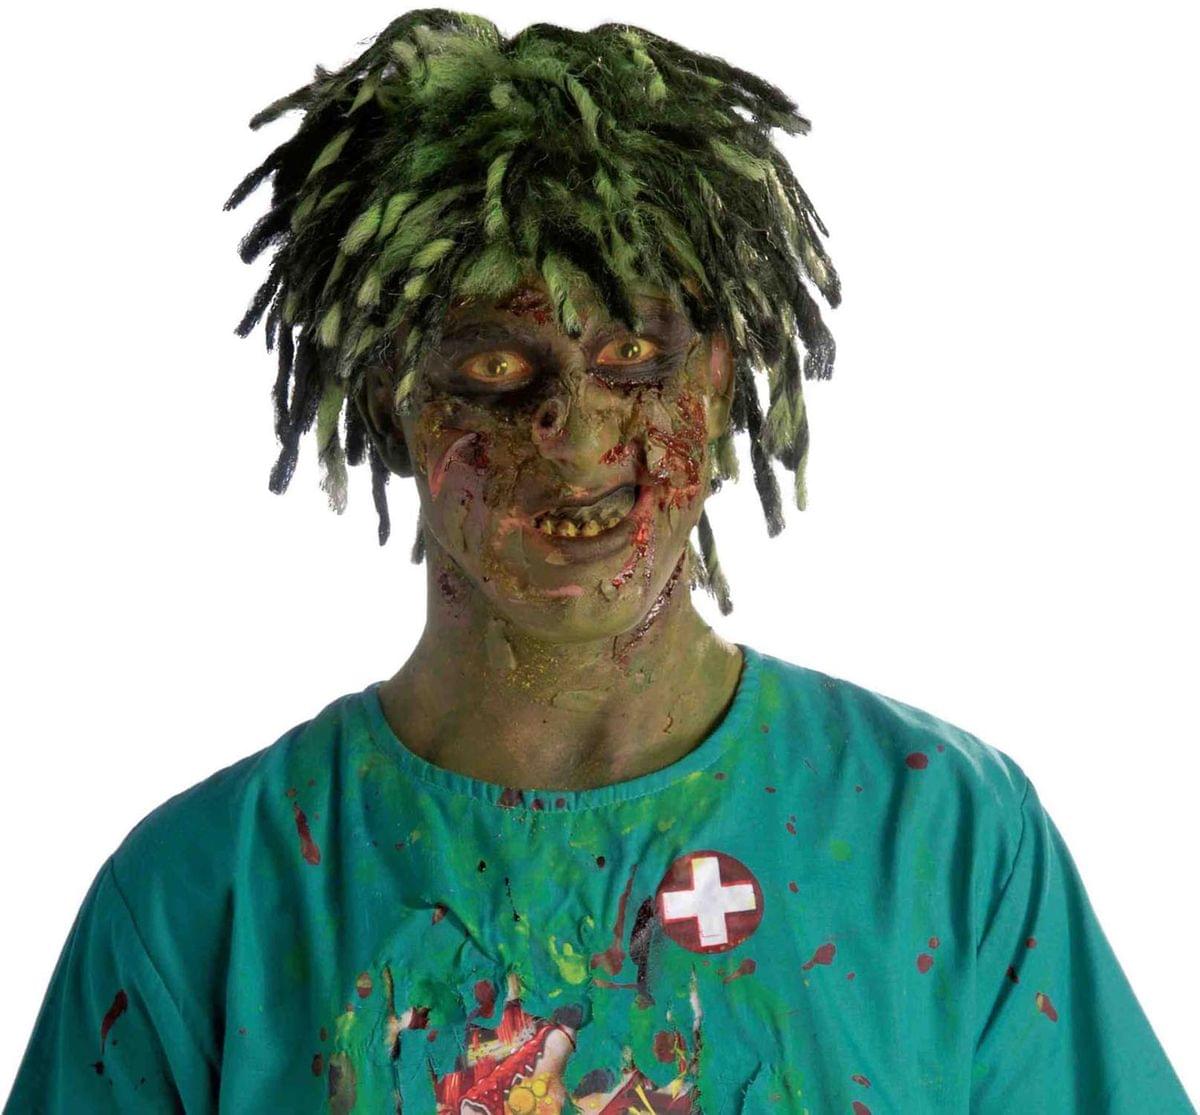 Biohazard Zombie Contaminated Adult Male Costume Wig